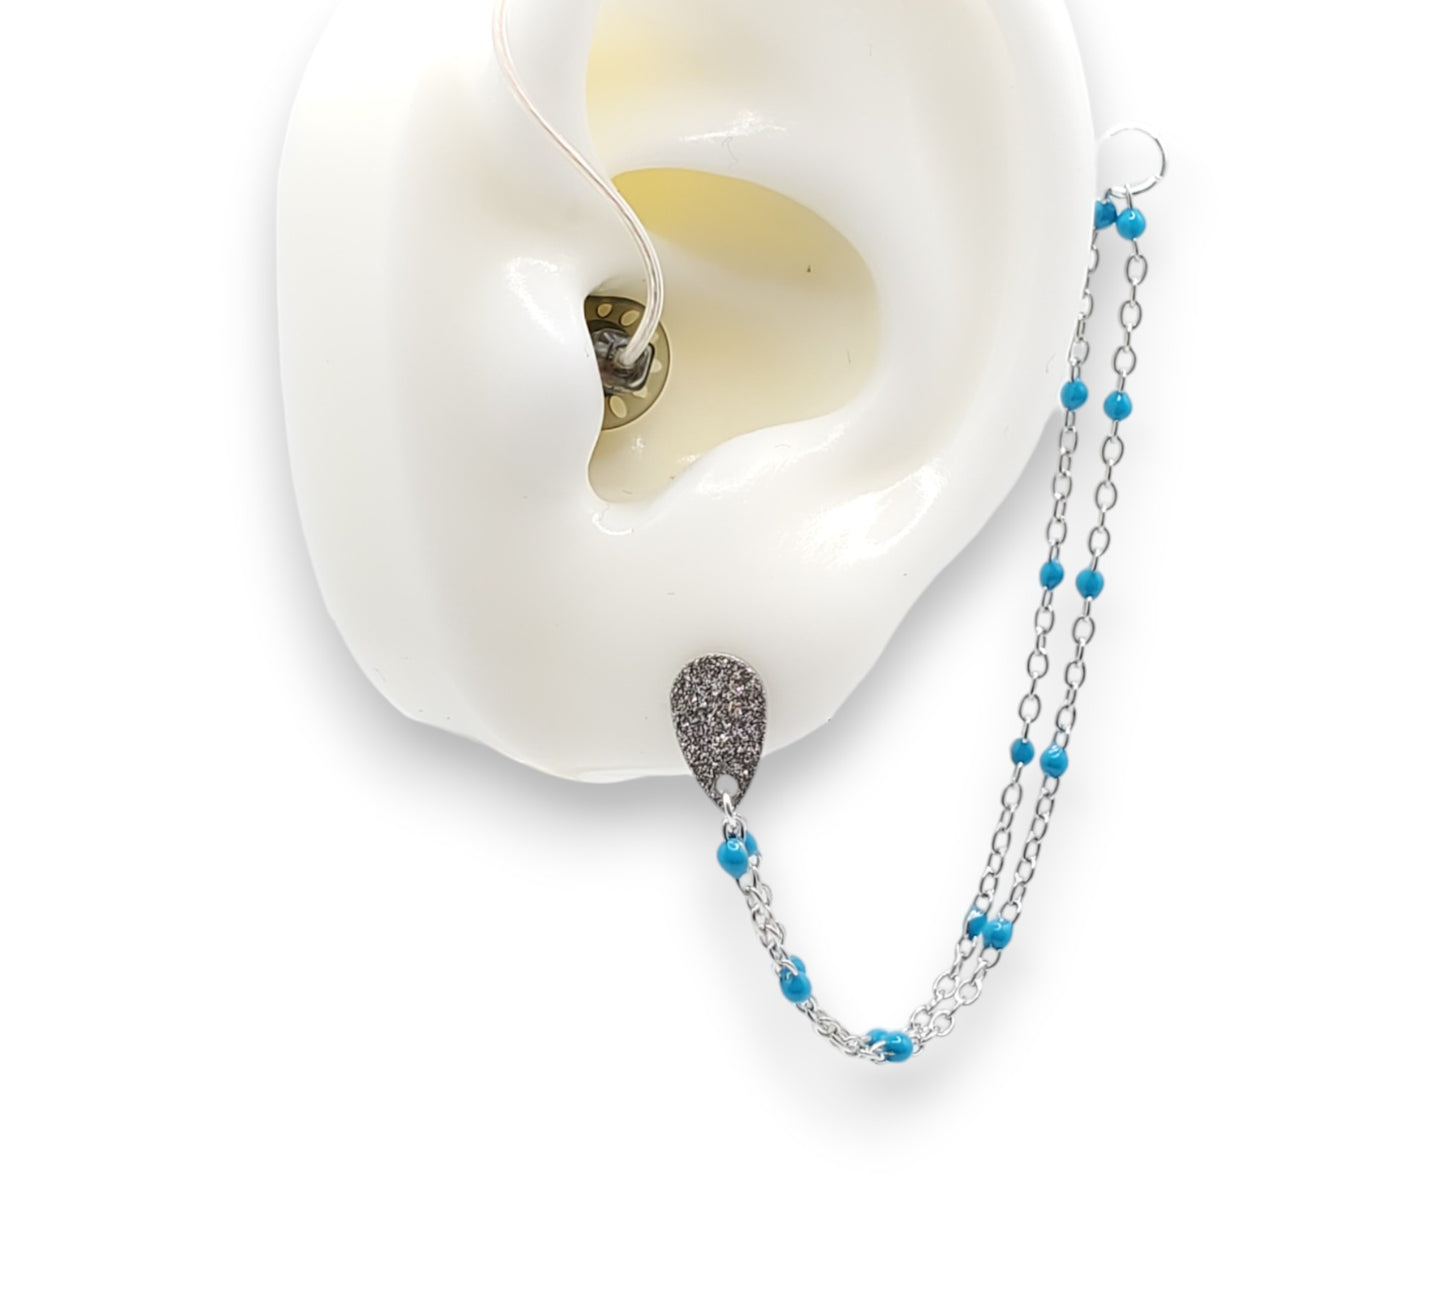 EarLinks de cadena detallada azul - Audífonos